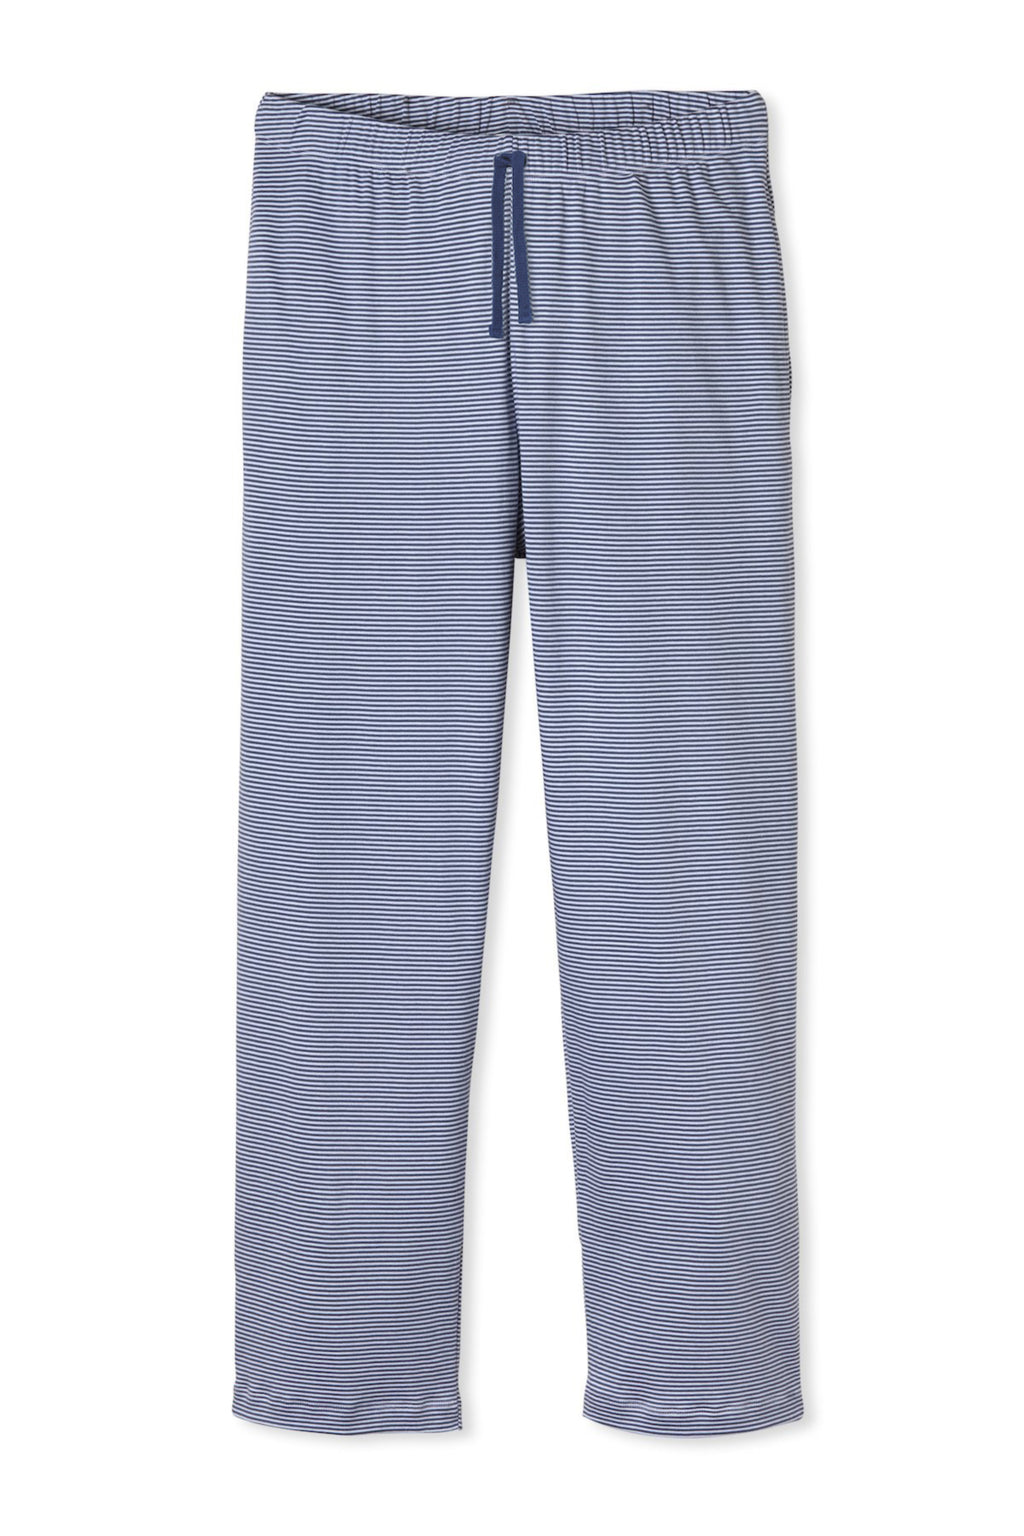 Women's Extra Tall Flannel Pajama Pants Extra Long Pj Pants Navy